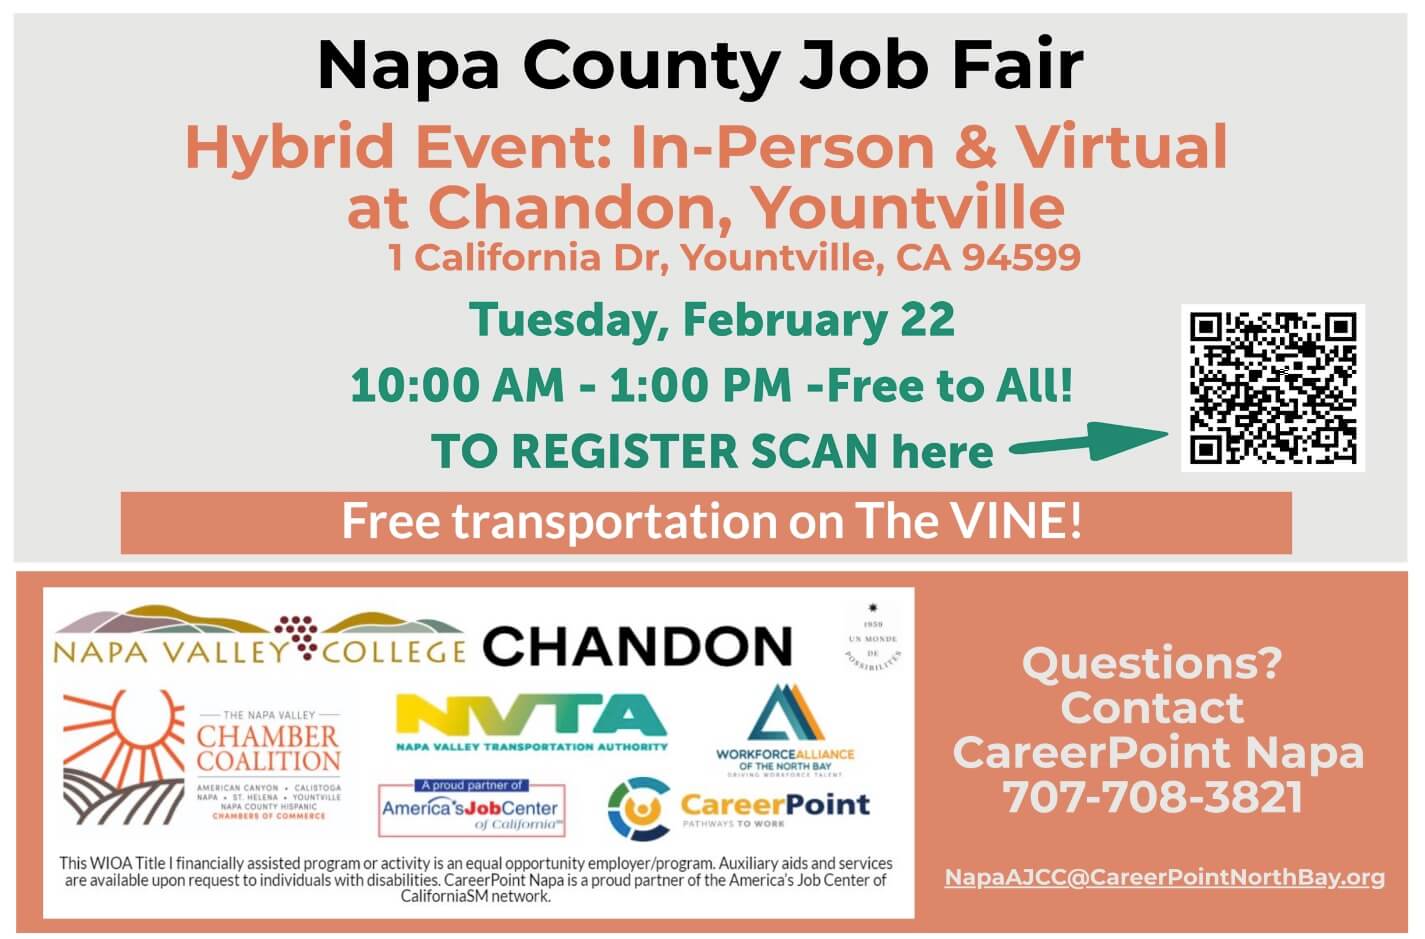 napa county job fair feb 22